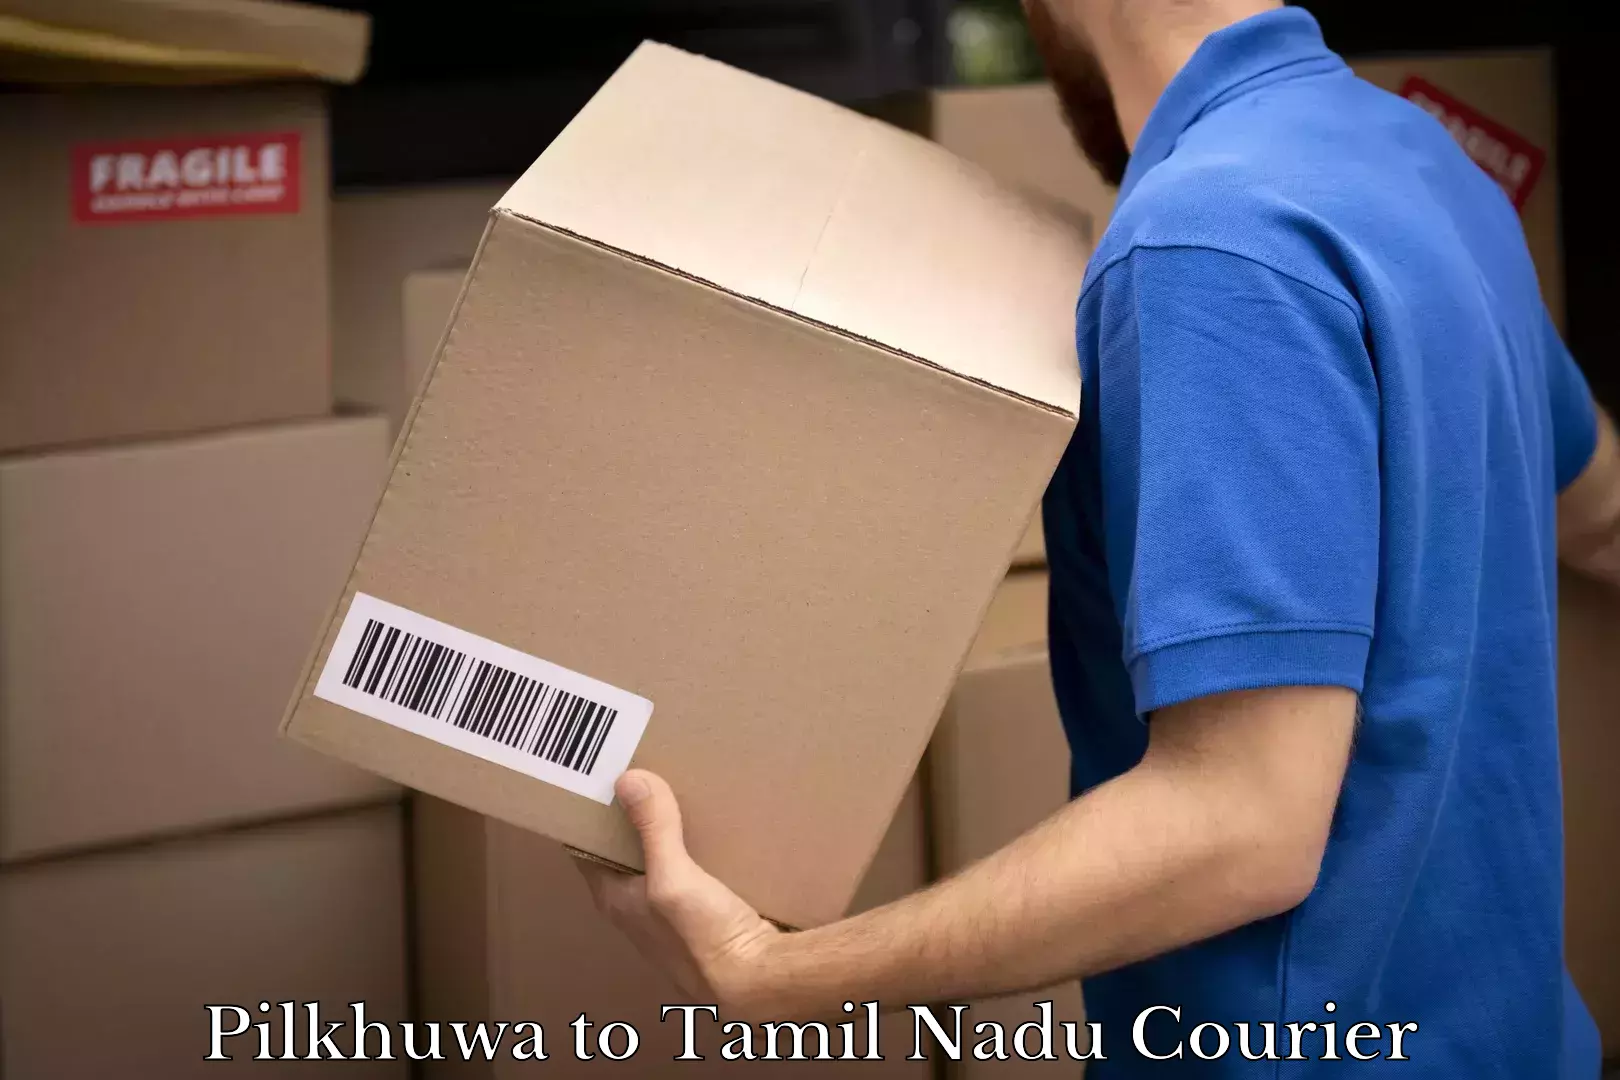 Professional courier handling Pilkhuwa to Tamil Nadu